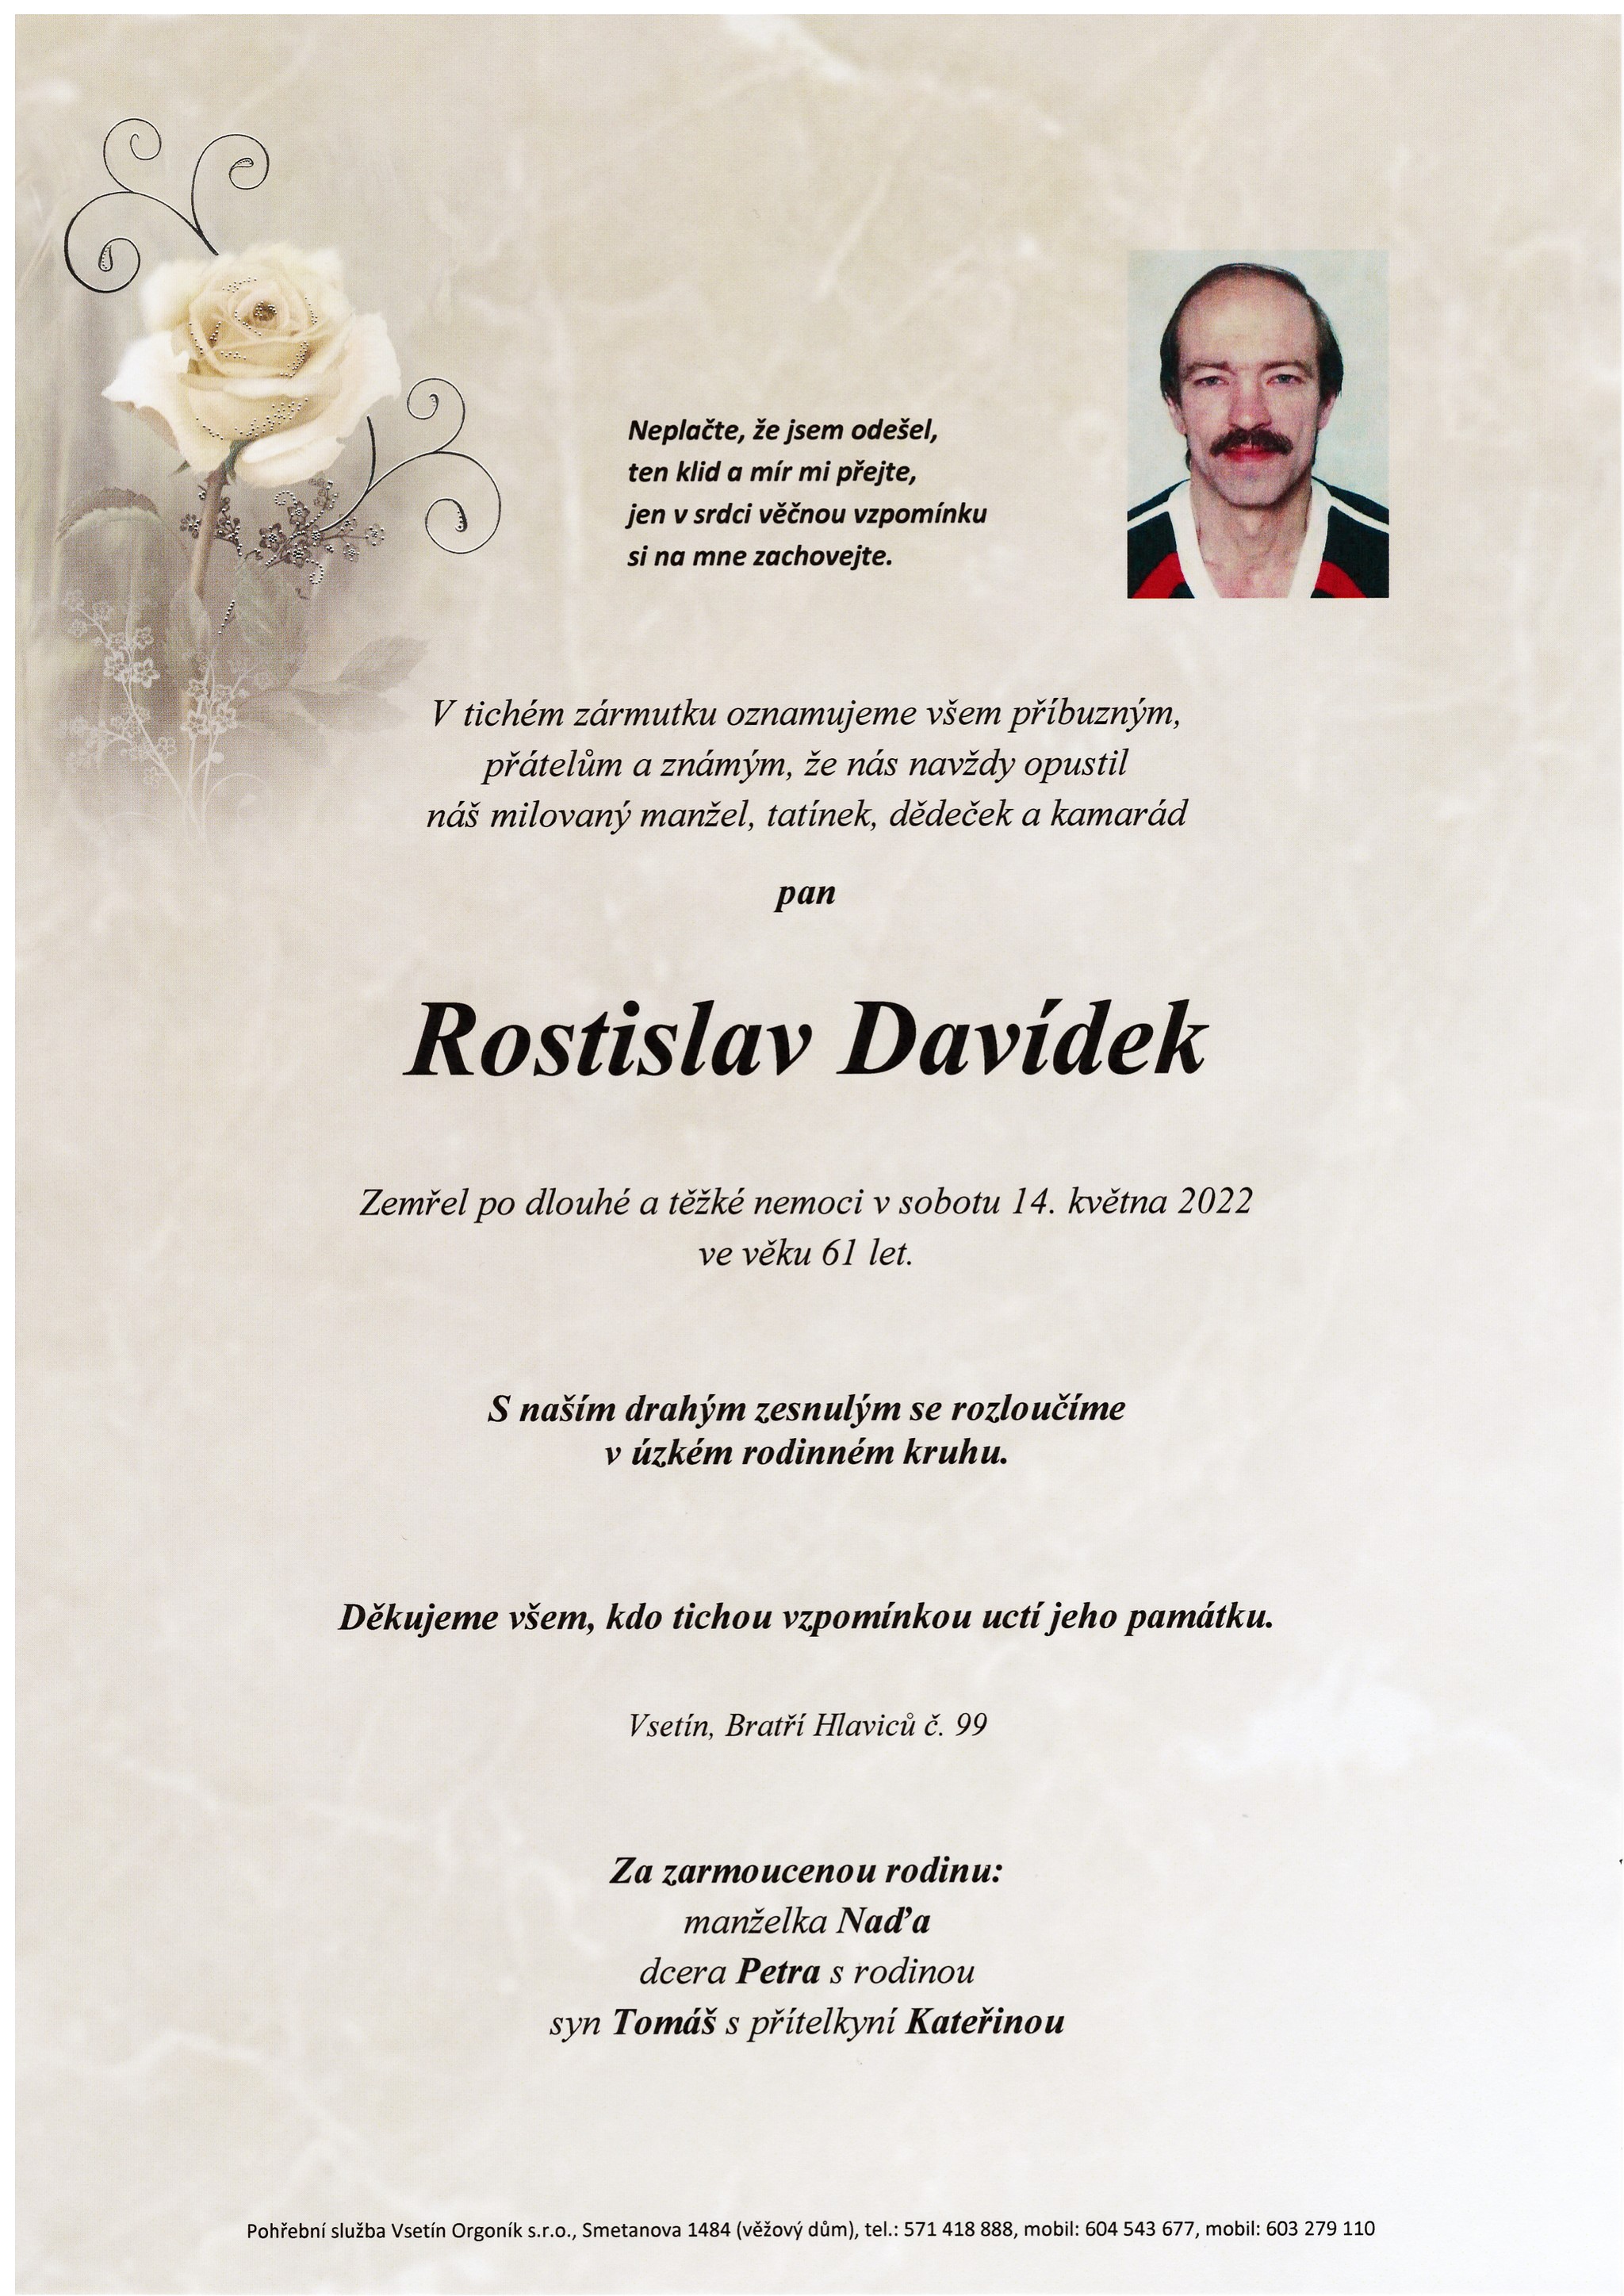 Rostislav Davídek